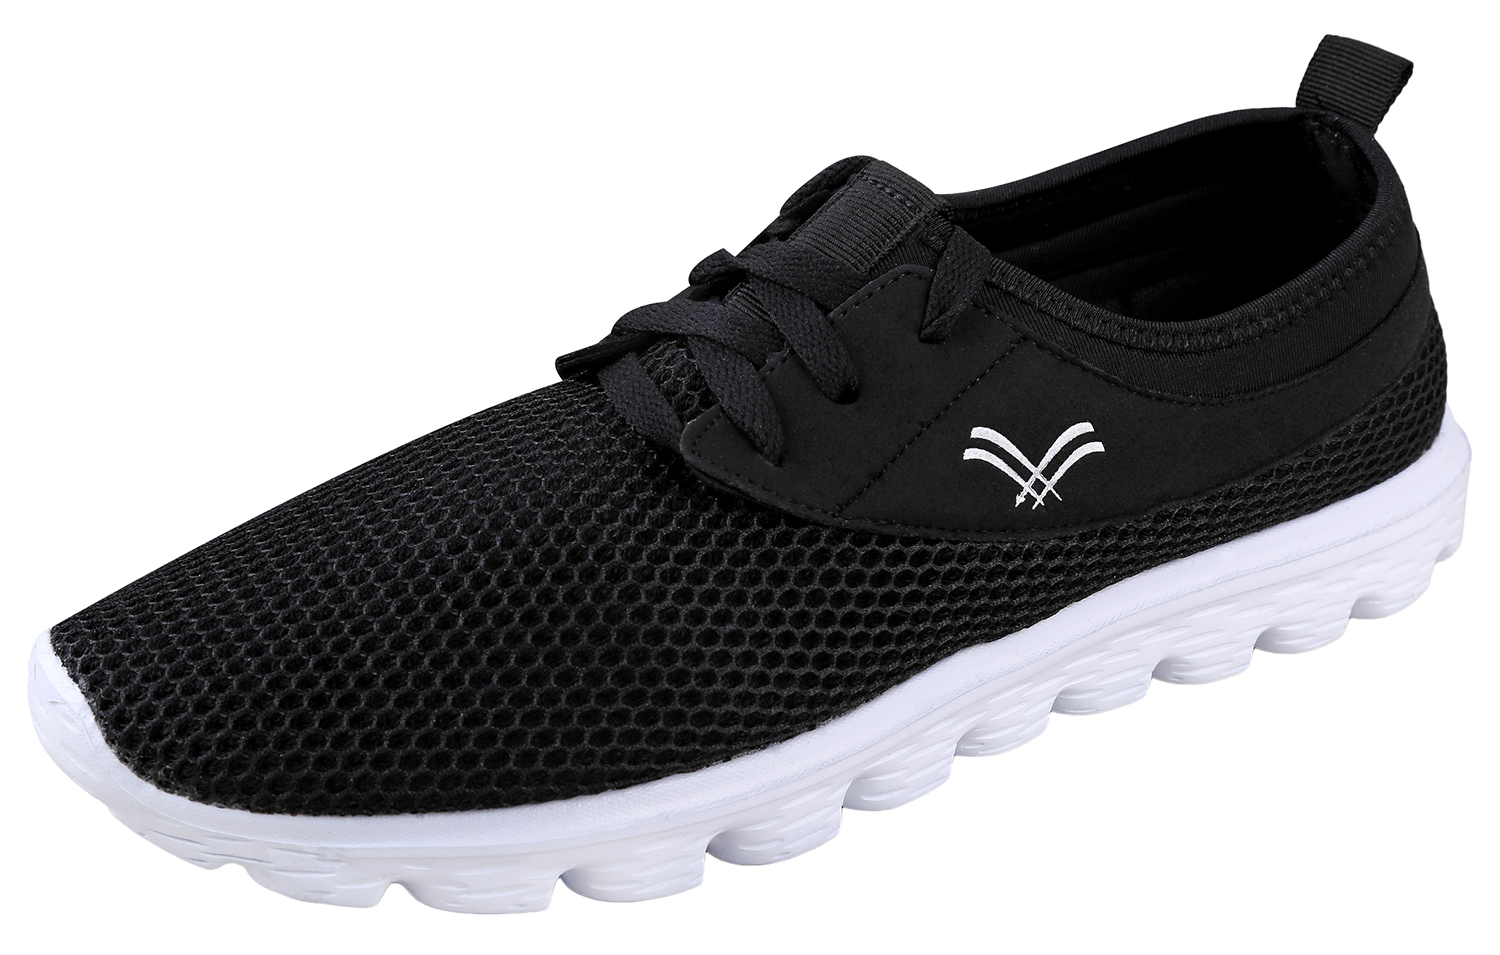 Urban Fox Men's Breeze Lightweight Shoes | Lightweight Shoes for Men | Casual Shoes | Walking Shoes for Men | Black/White 11 M US - image 1 of 7